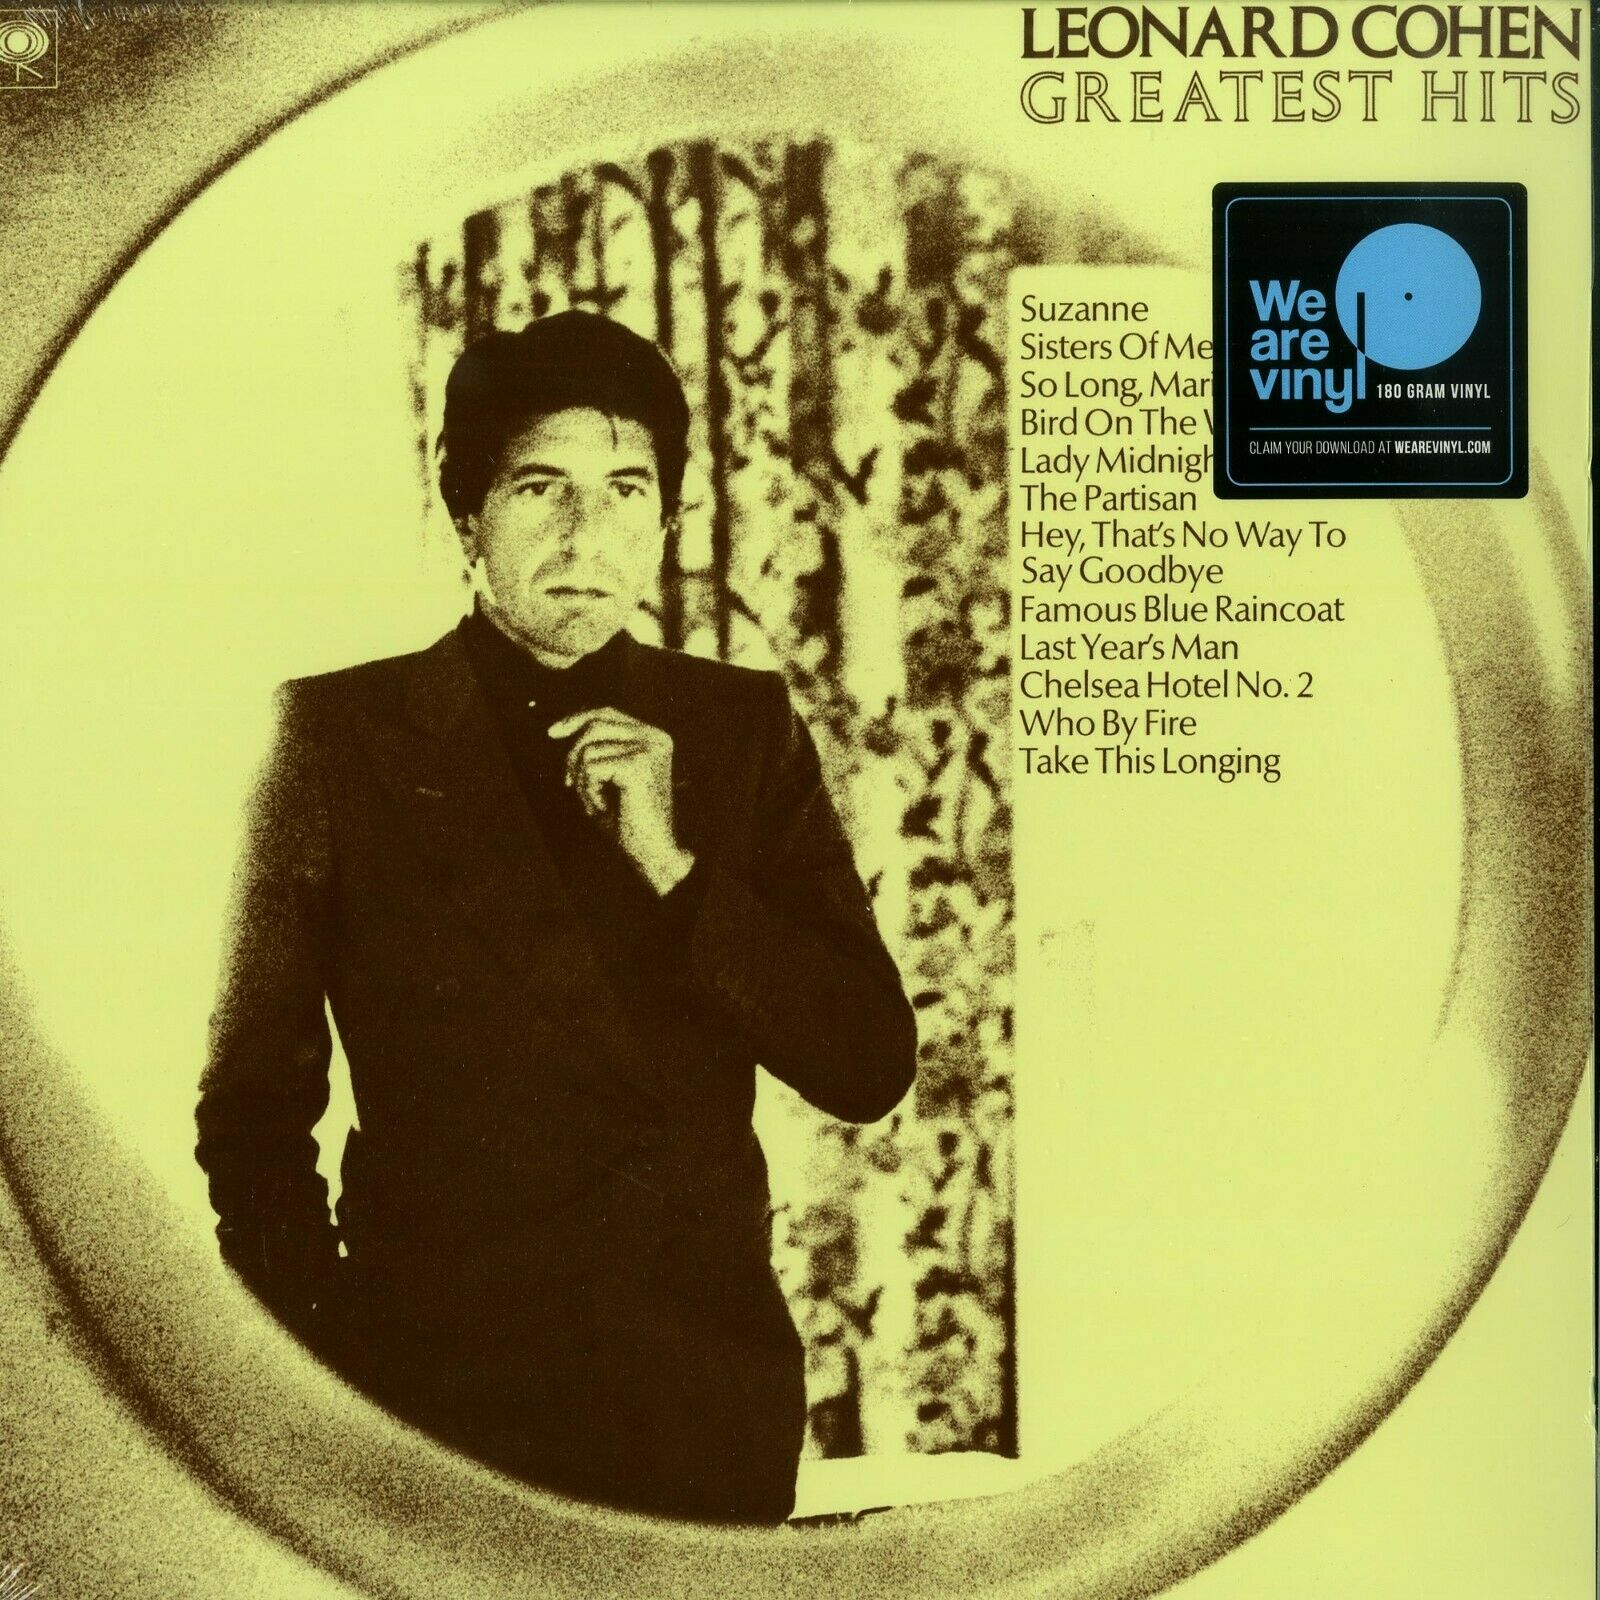 Leonard Cohen – Greatest Hits תקליט